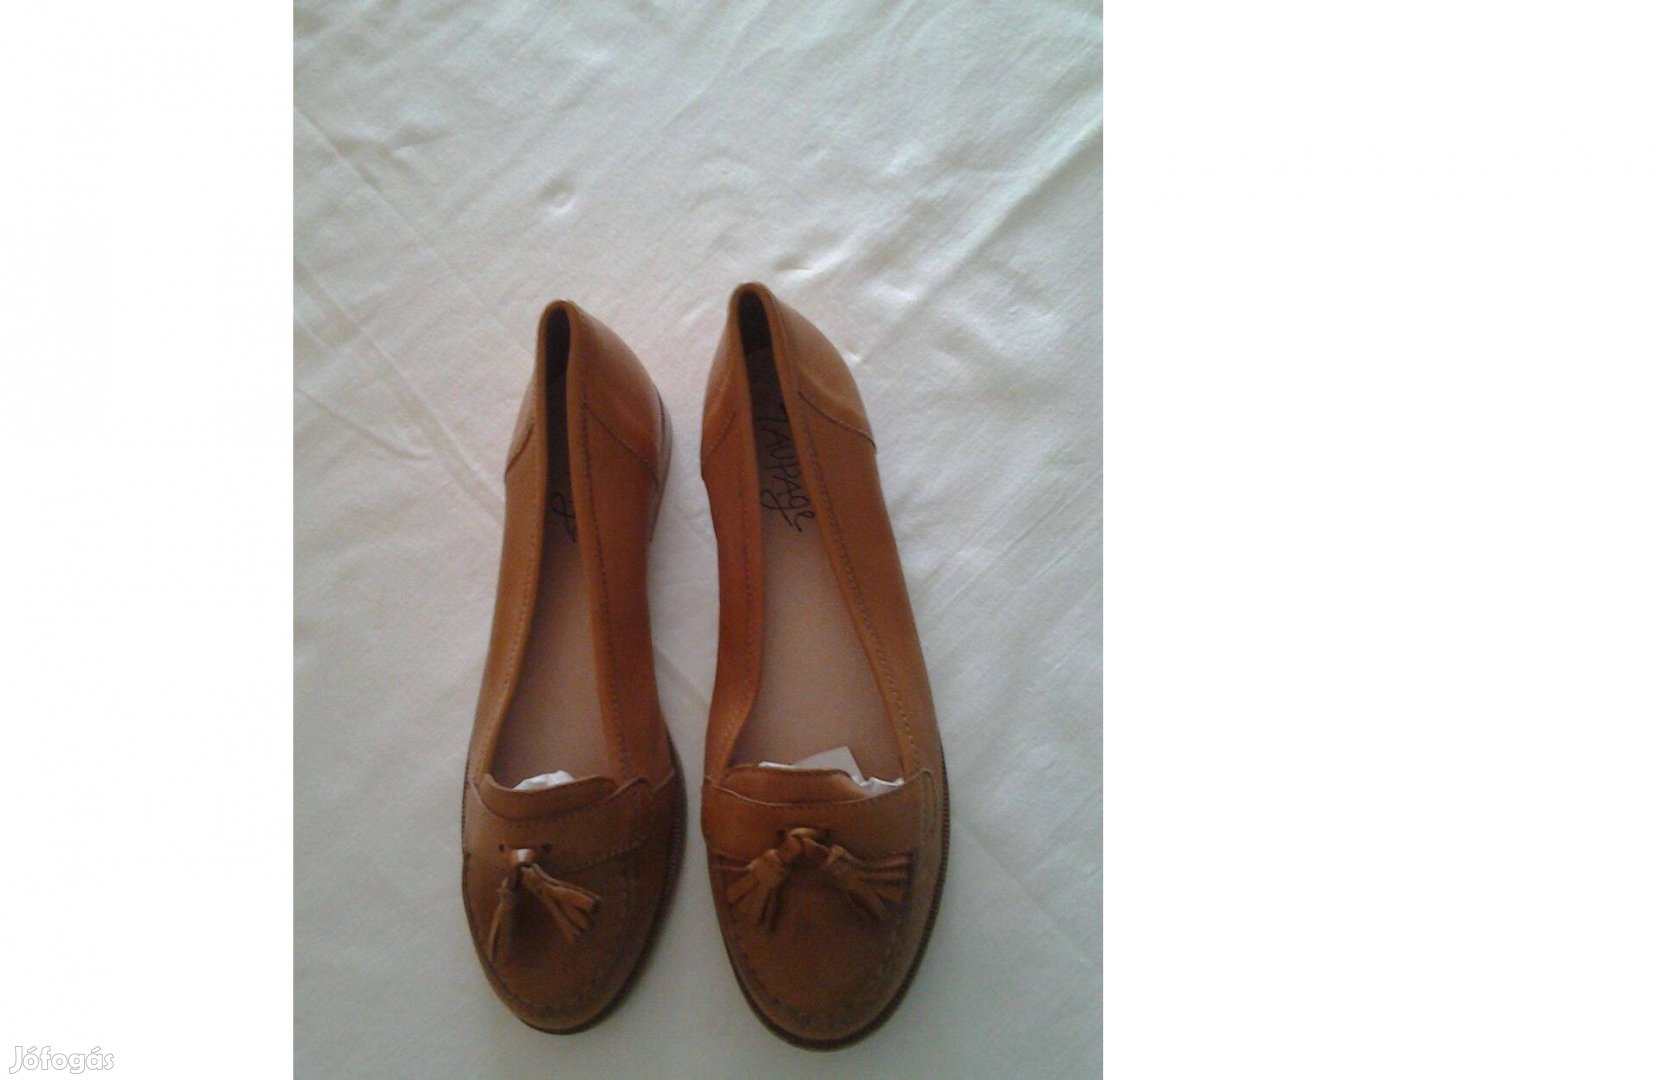 Új női bőr cipő , Taupage márka, 36 - 36,5 méret, barna